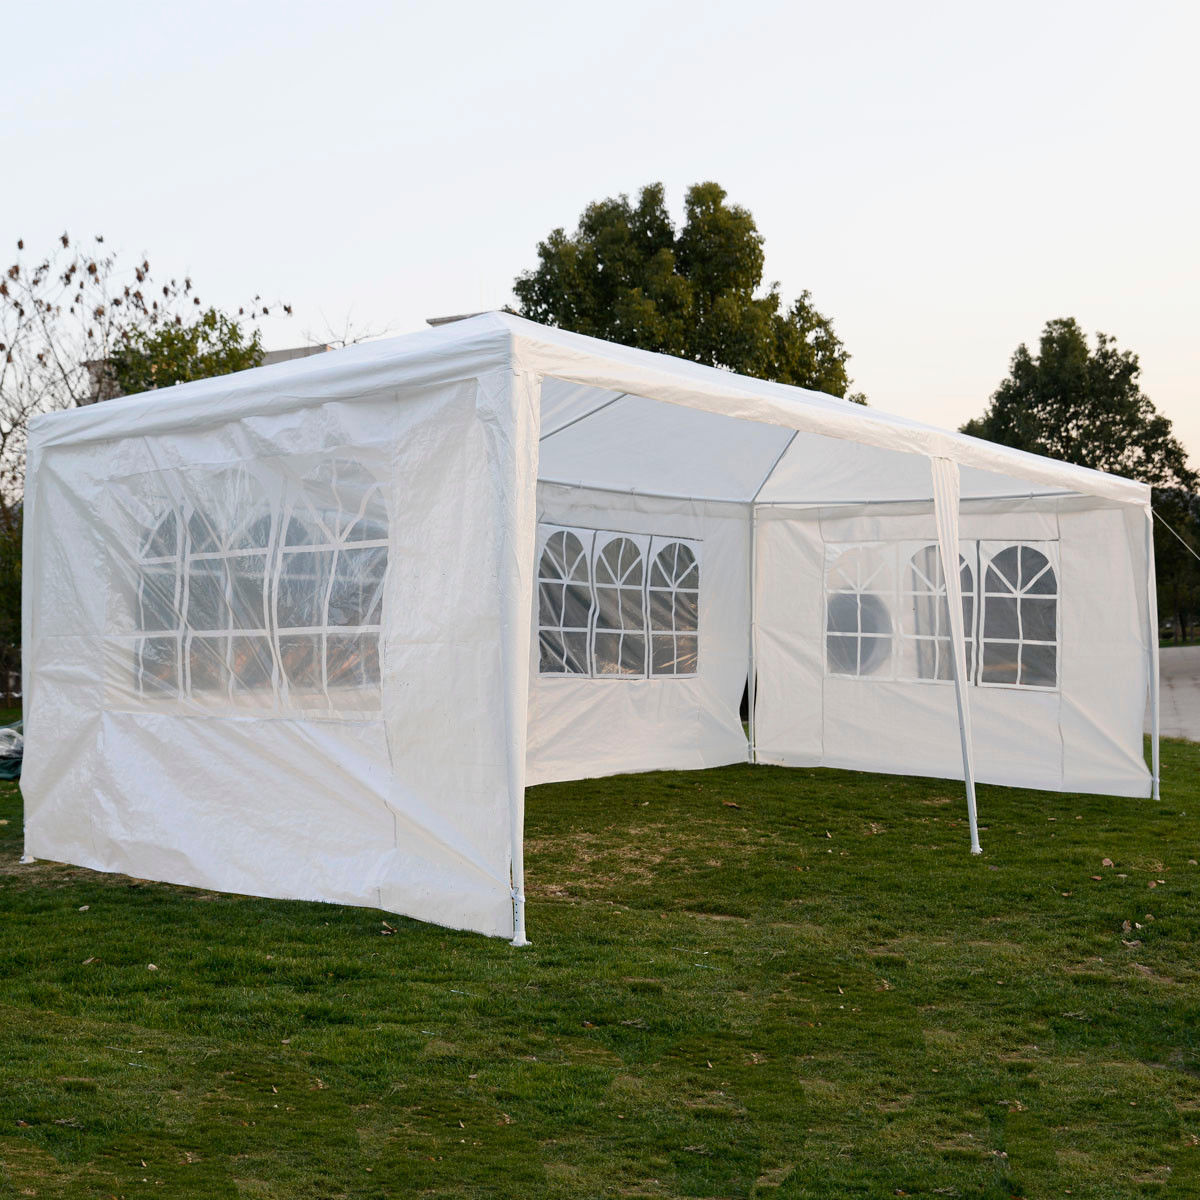 10 x 20 White Party Tent w/ 4 Sidewalls